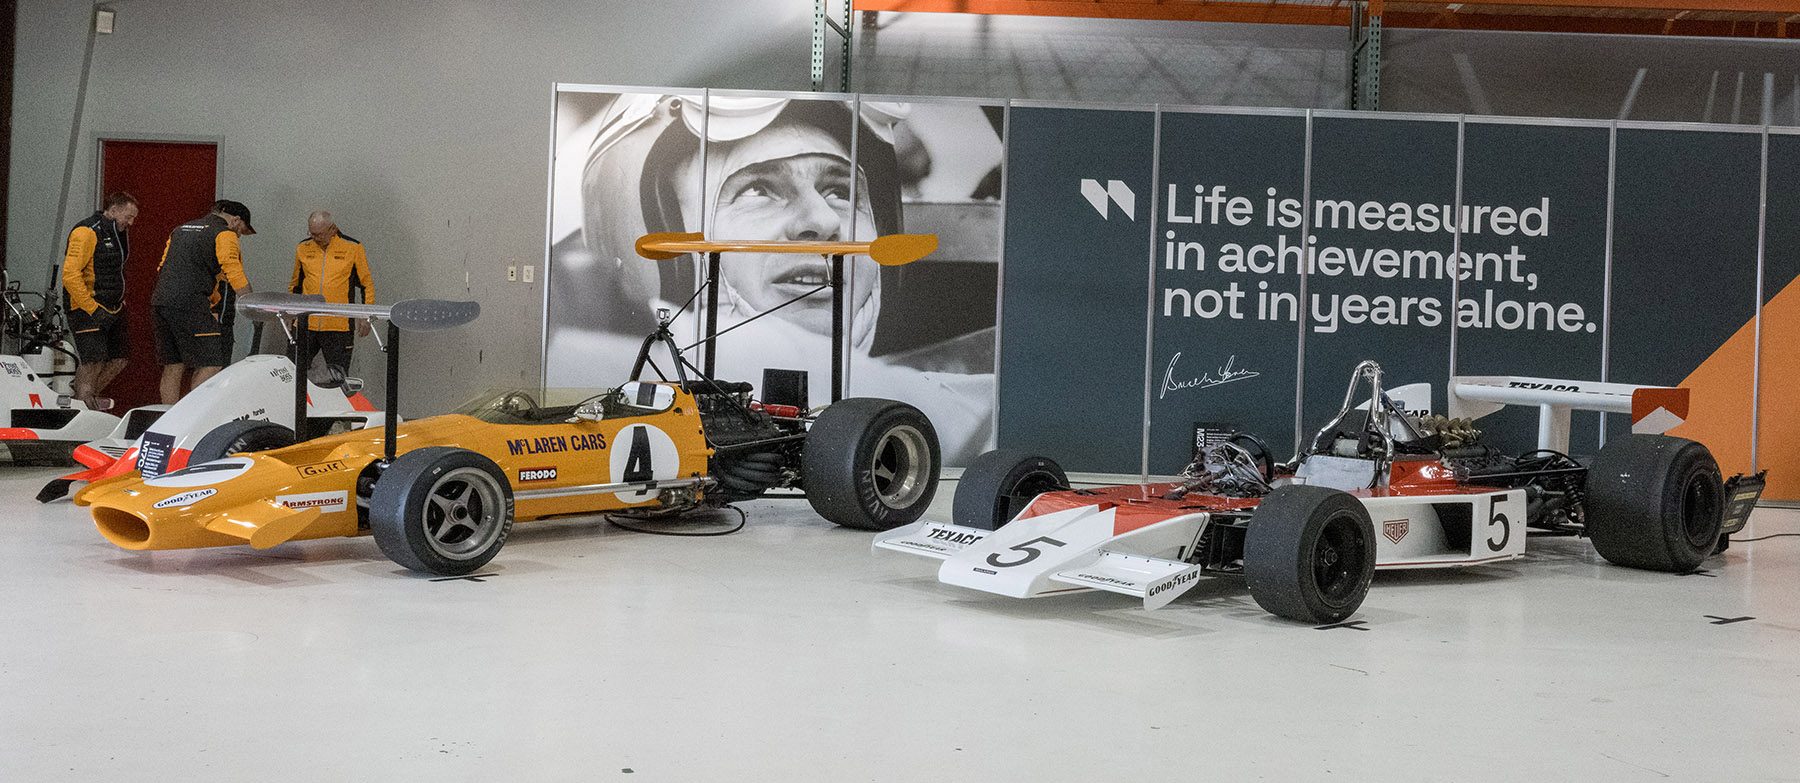 McLaren formula 1 heritage exhibit - Copyright bill@historicmotorprints.com Bill Wagenblatt